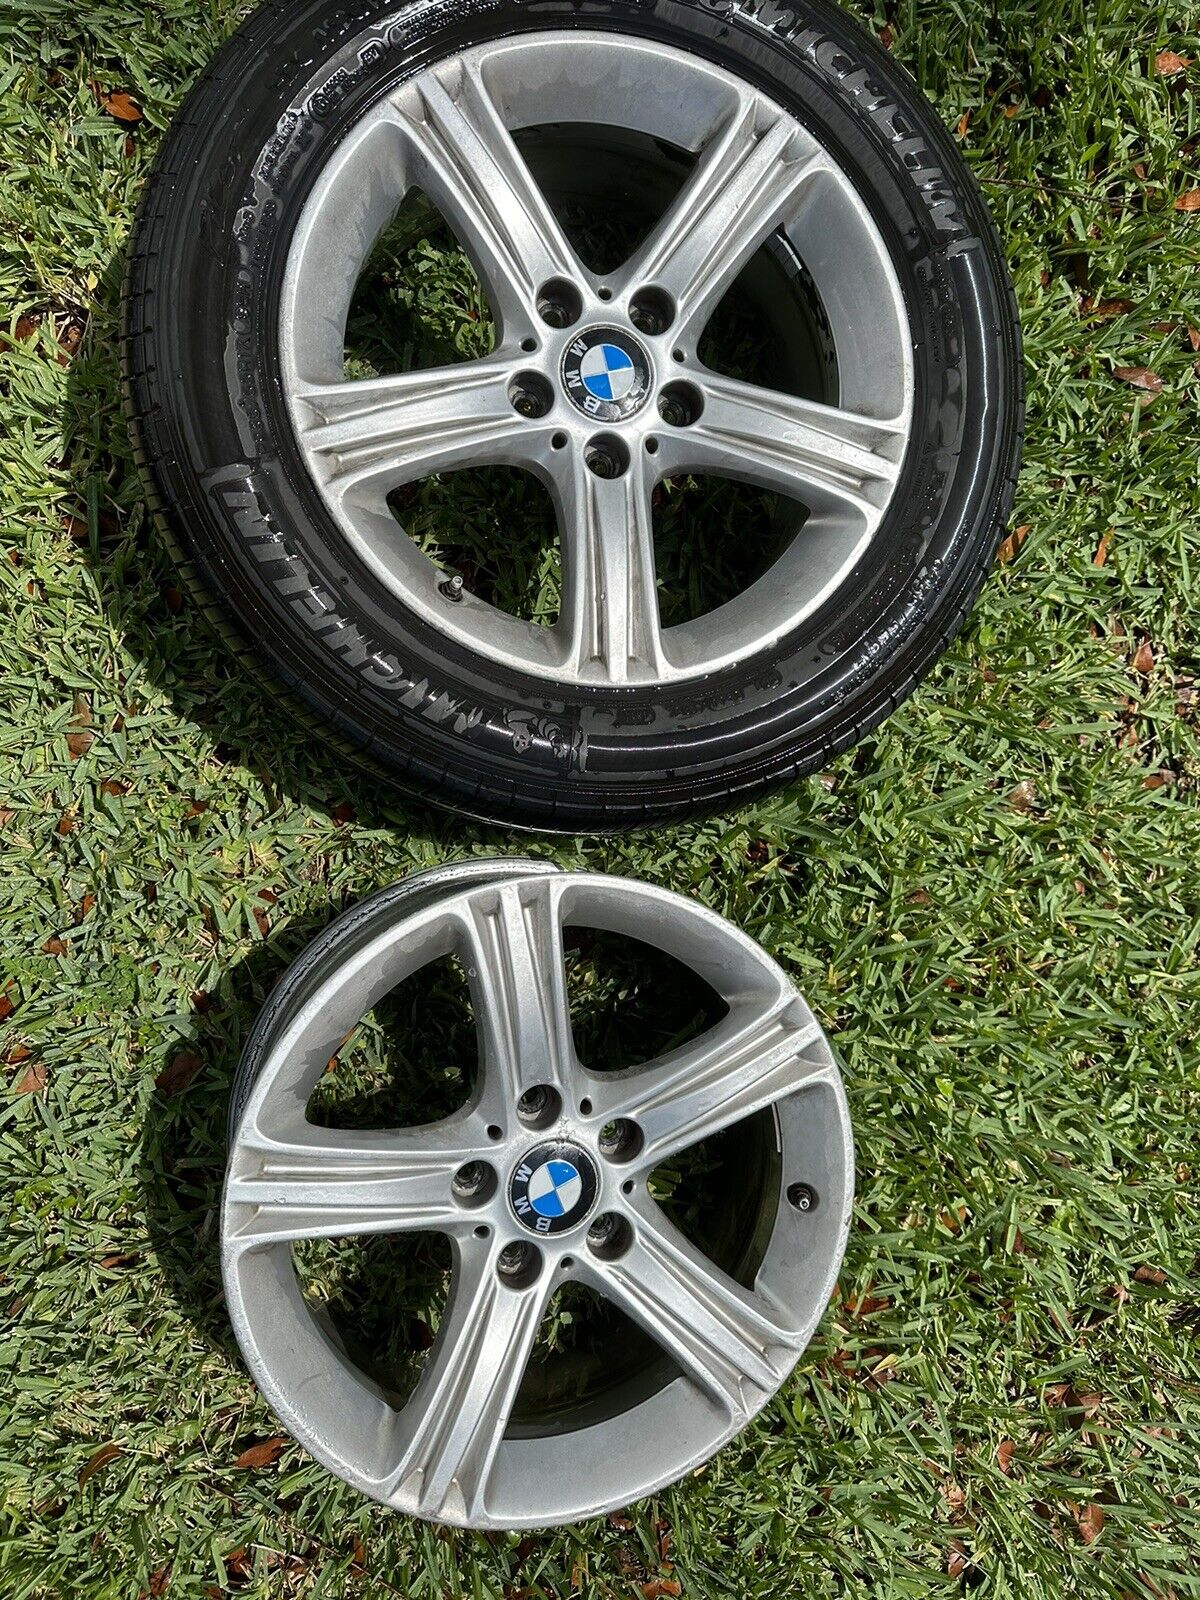 BMW 320i (2014) 17' OEM wheels & tires [RIM STYLE 392]